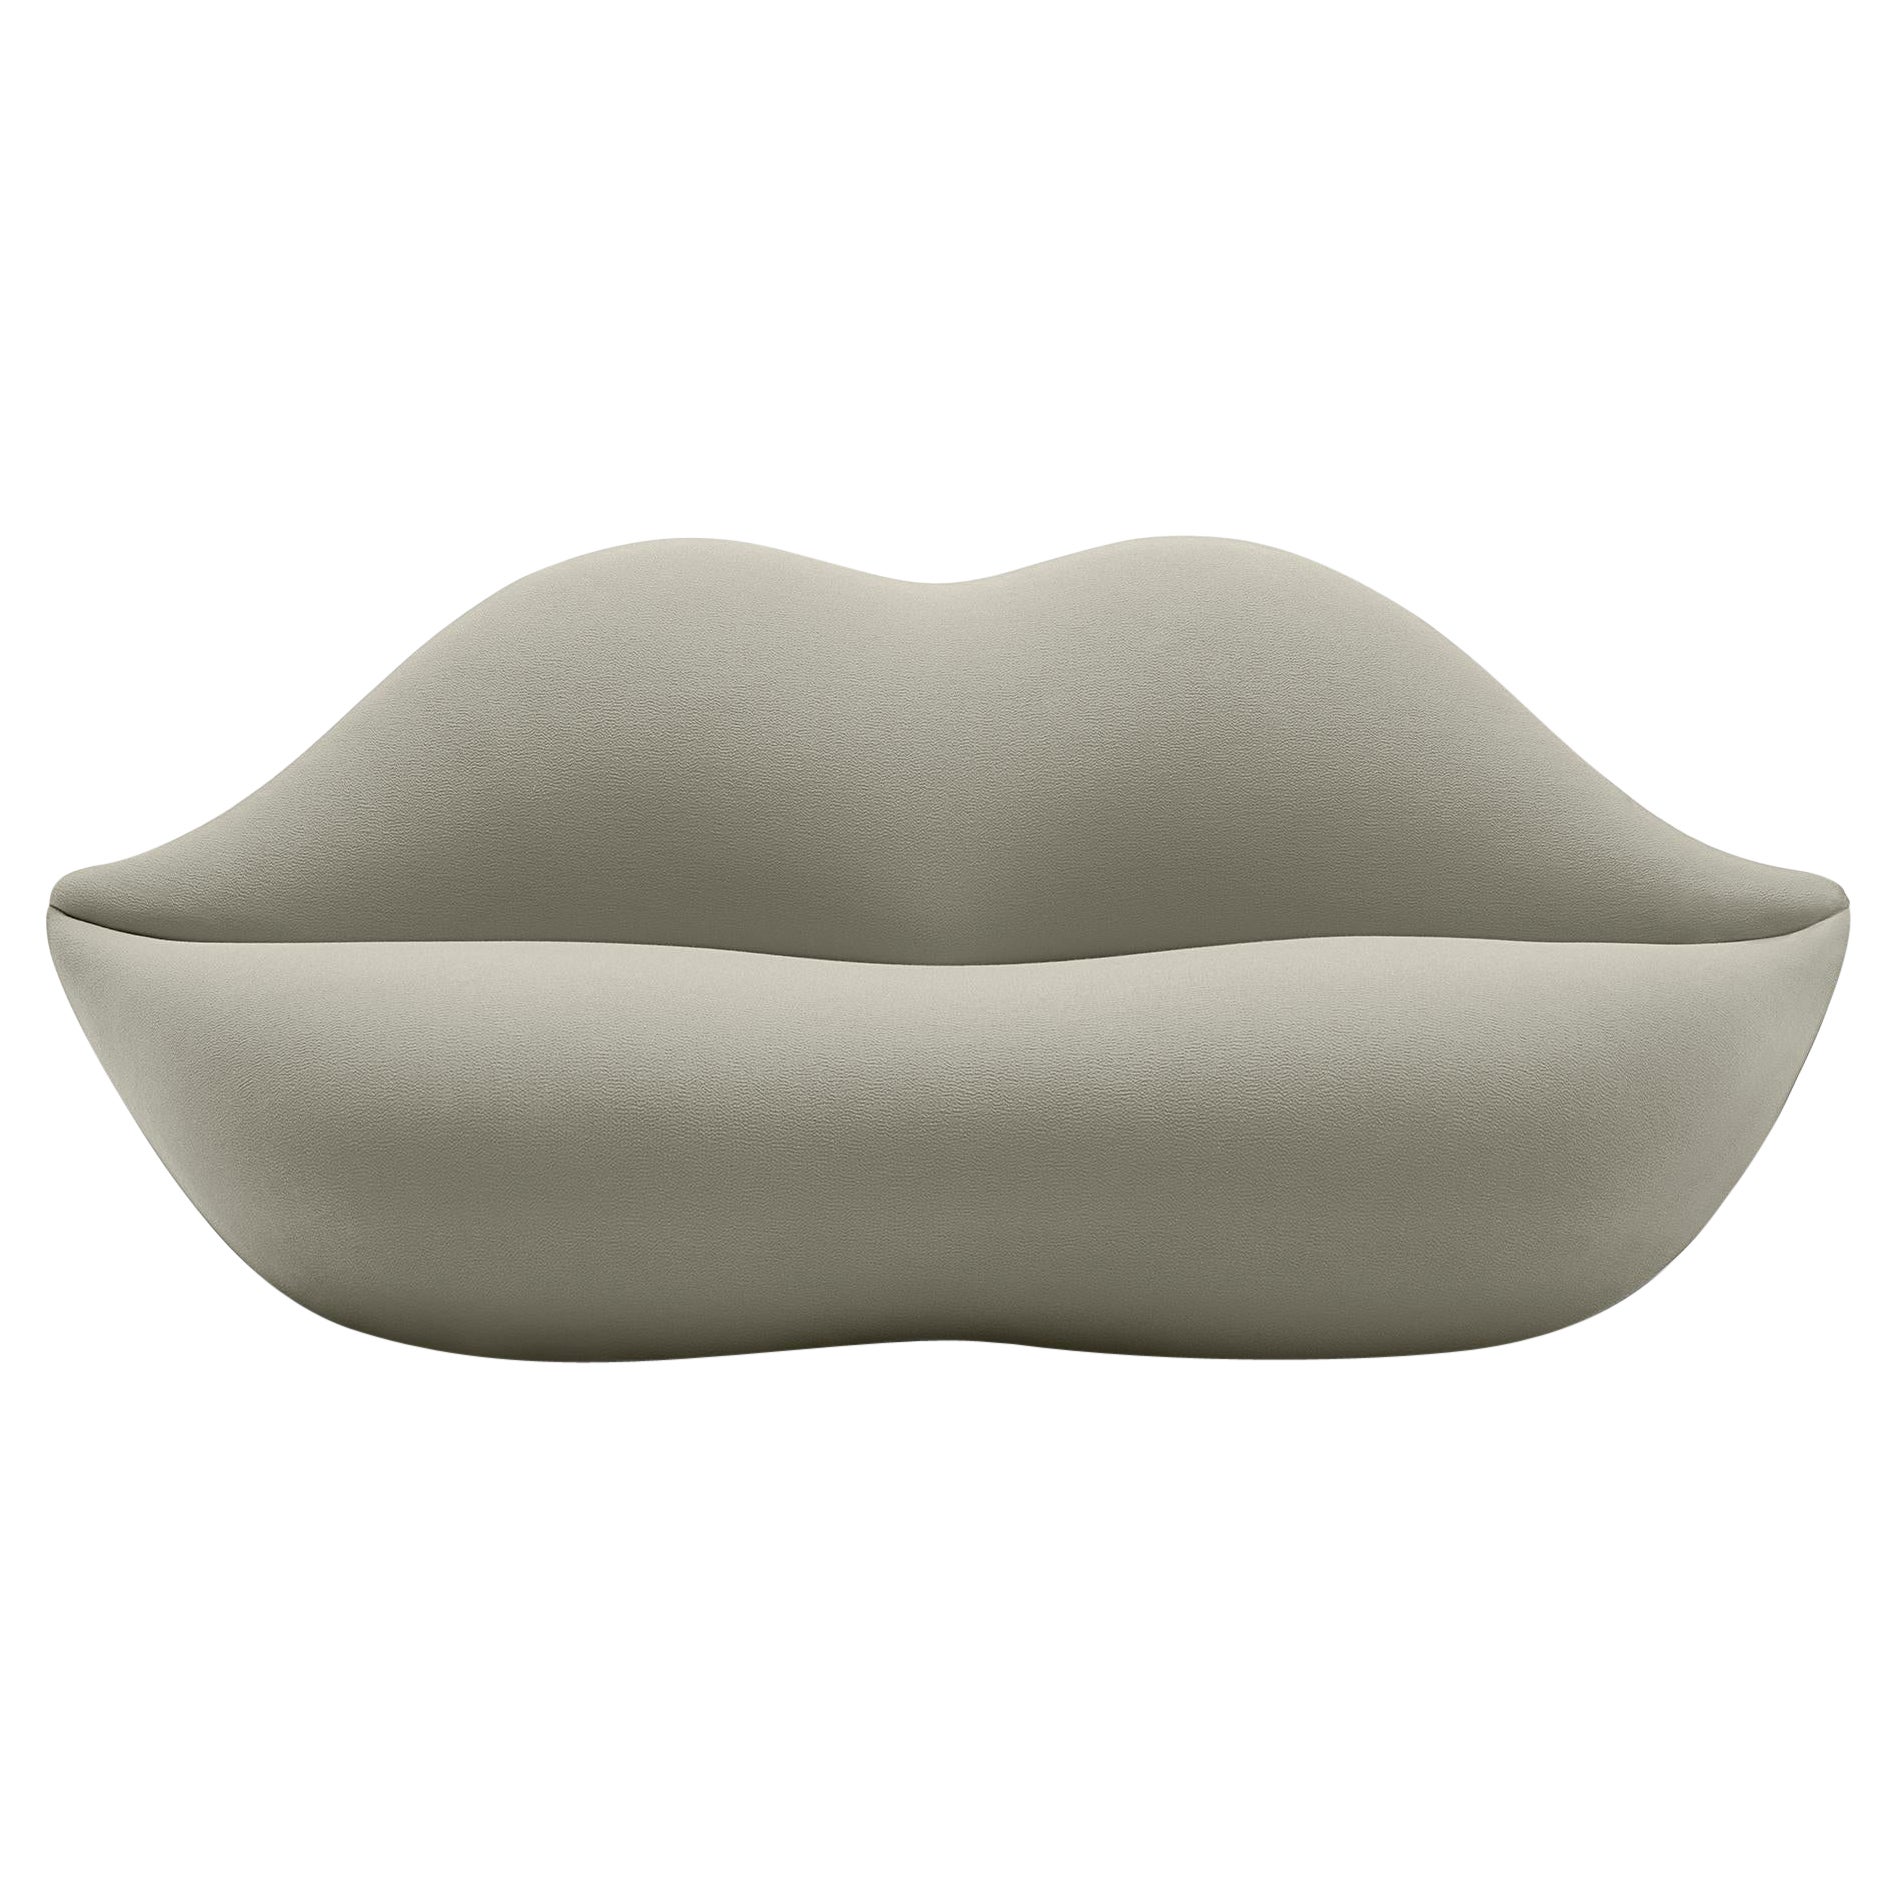 Gufram, 'Bocca Unlimited' Lip-Shaped Sofa, 810-Cream, by Studio 65